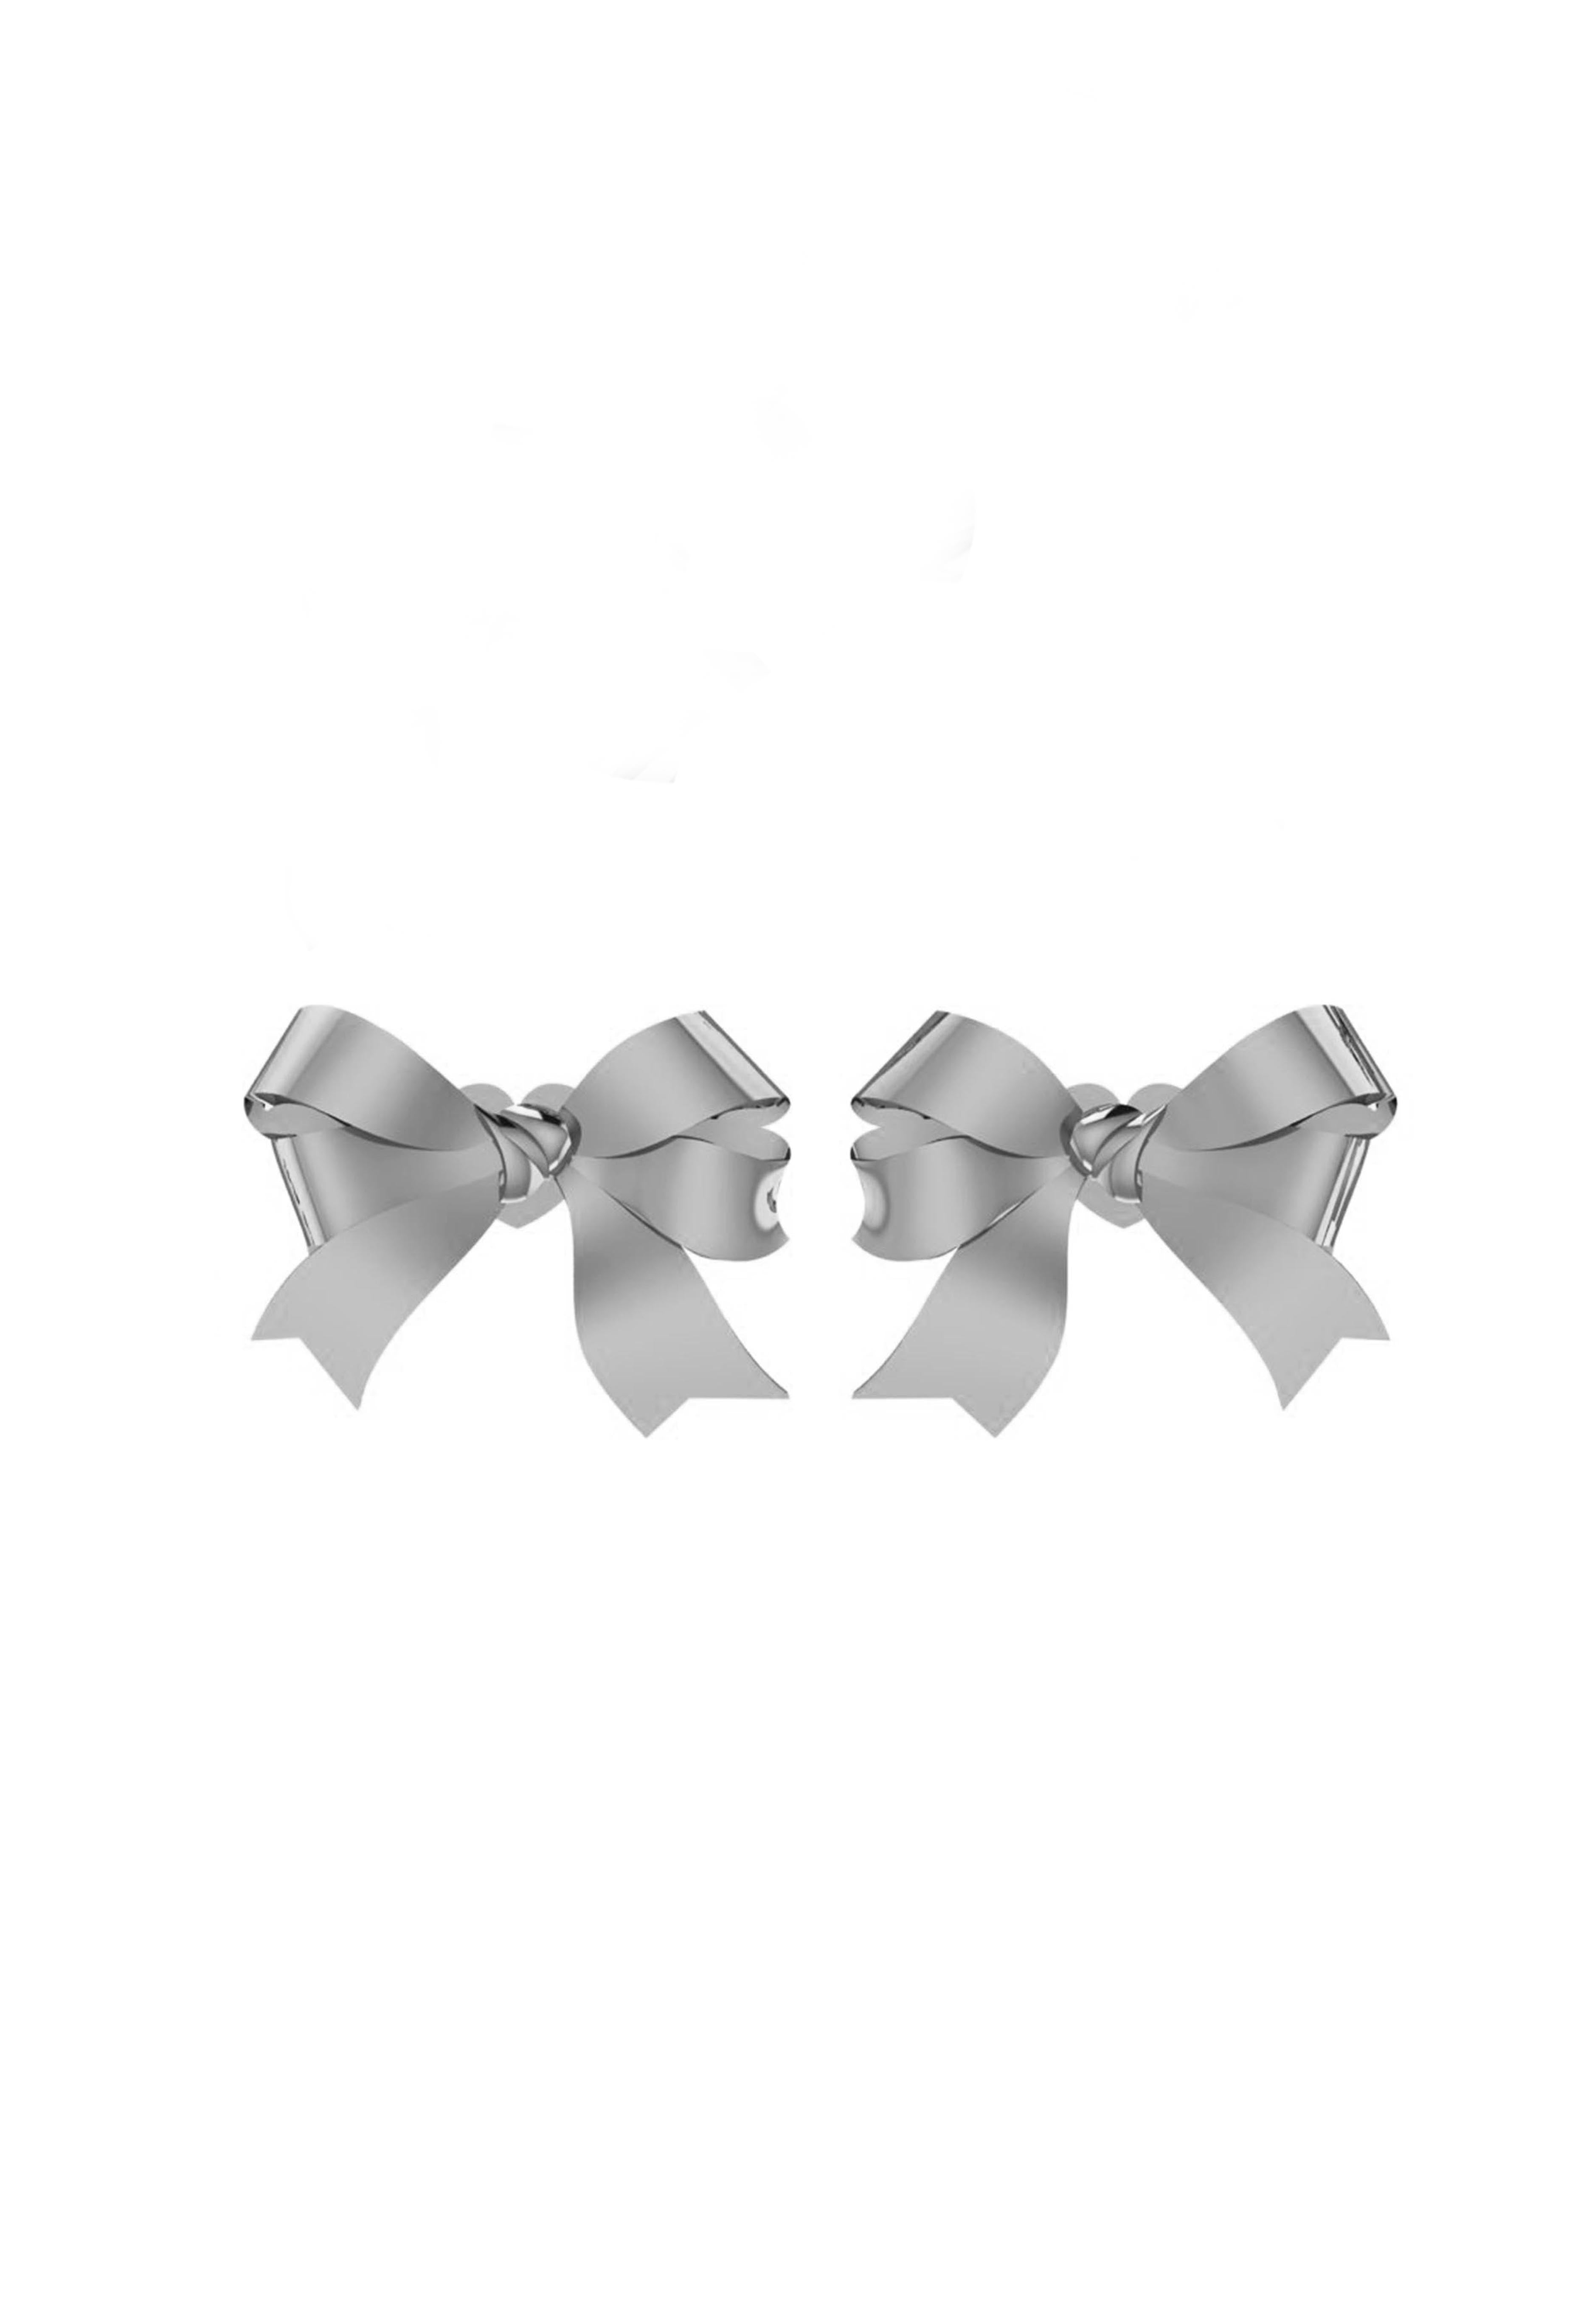 The Mini Bow Earrings